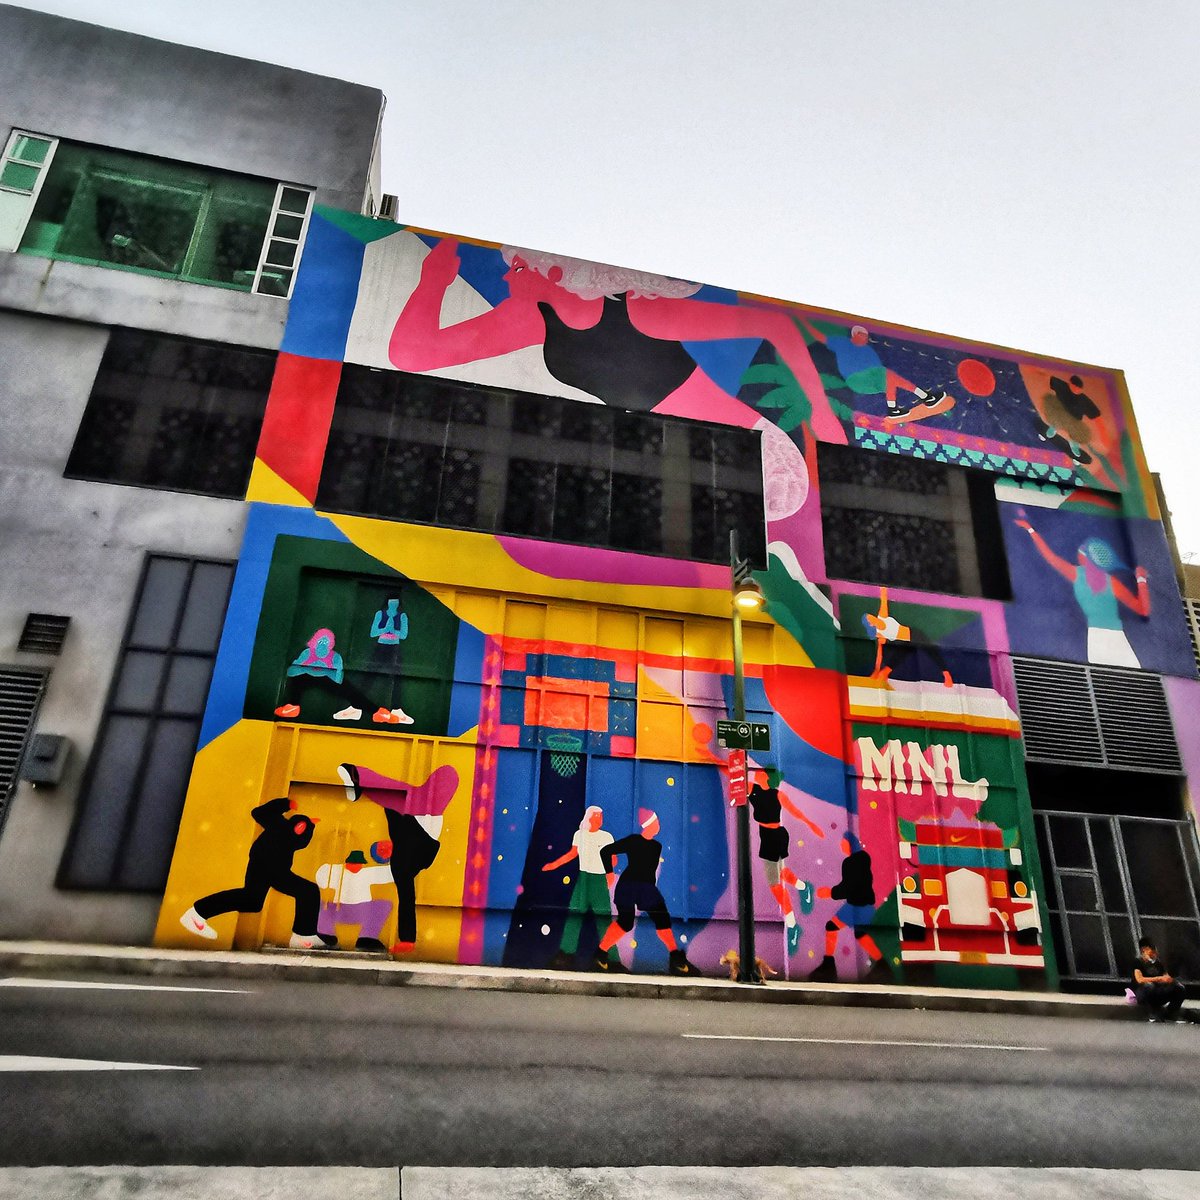 MNL

#mural #painting #architecture #streetphotography #streetart  #exteriordesign #julescapades #manila #philippines #bgc #travel #asia